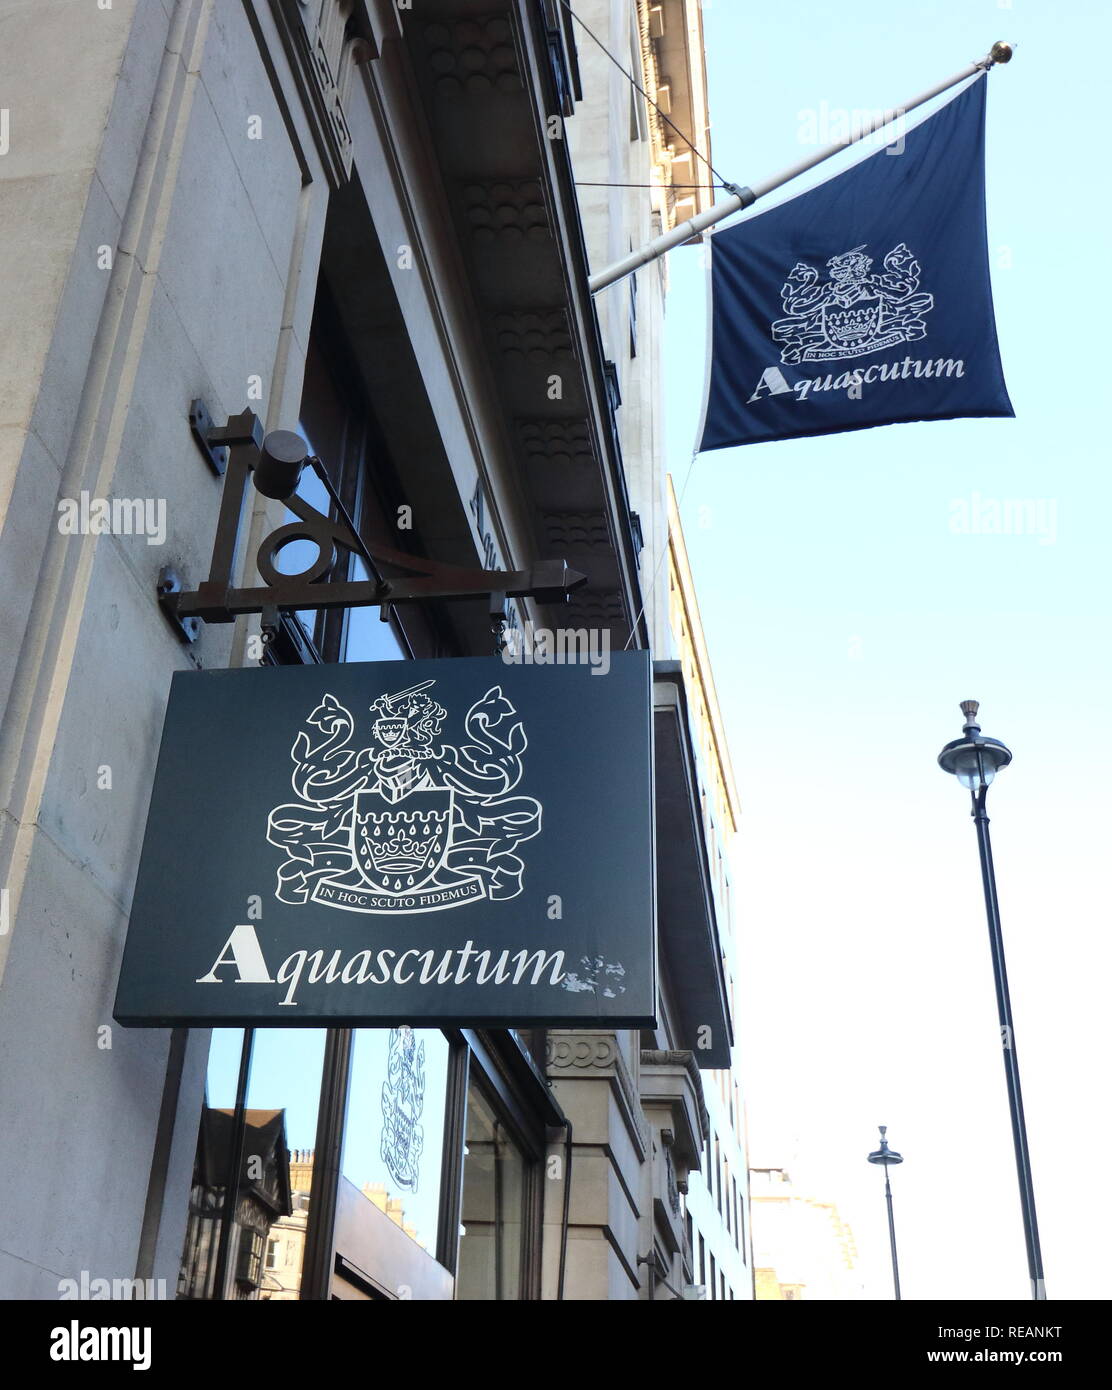 Aquascutum brand logo seen in Carnaby Street in London, UK Stock Photo -  Alamy